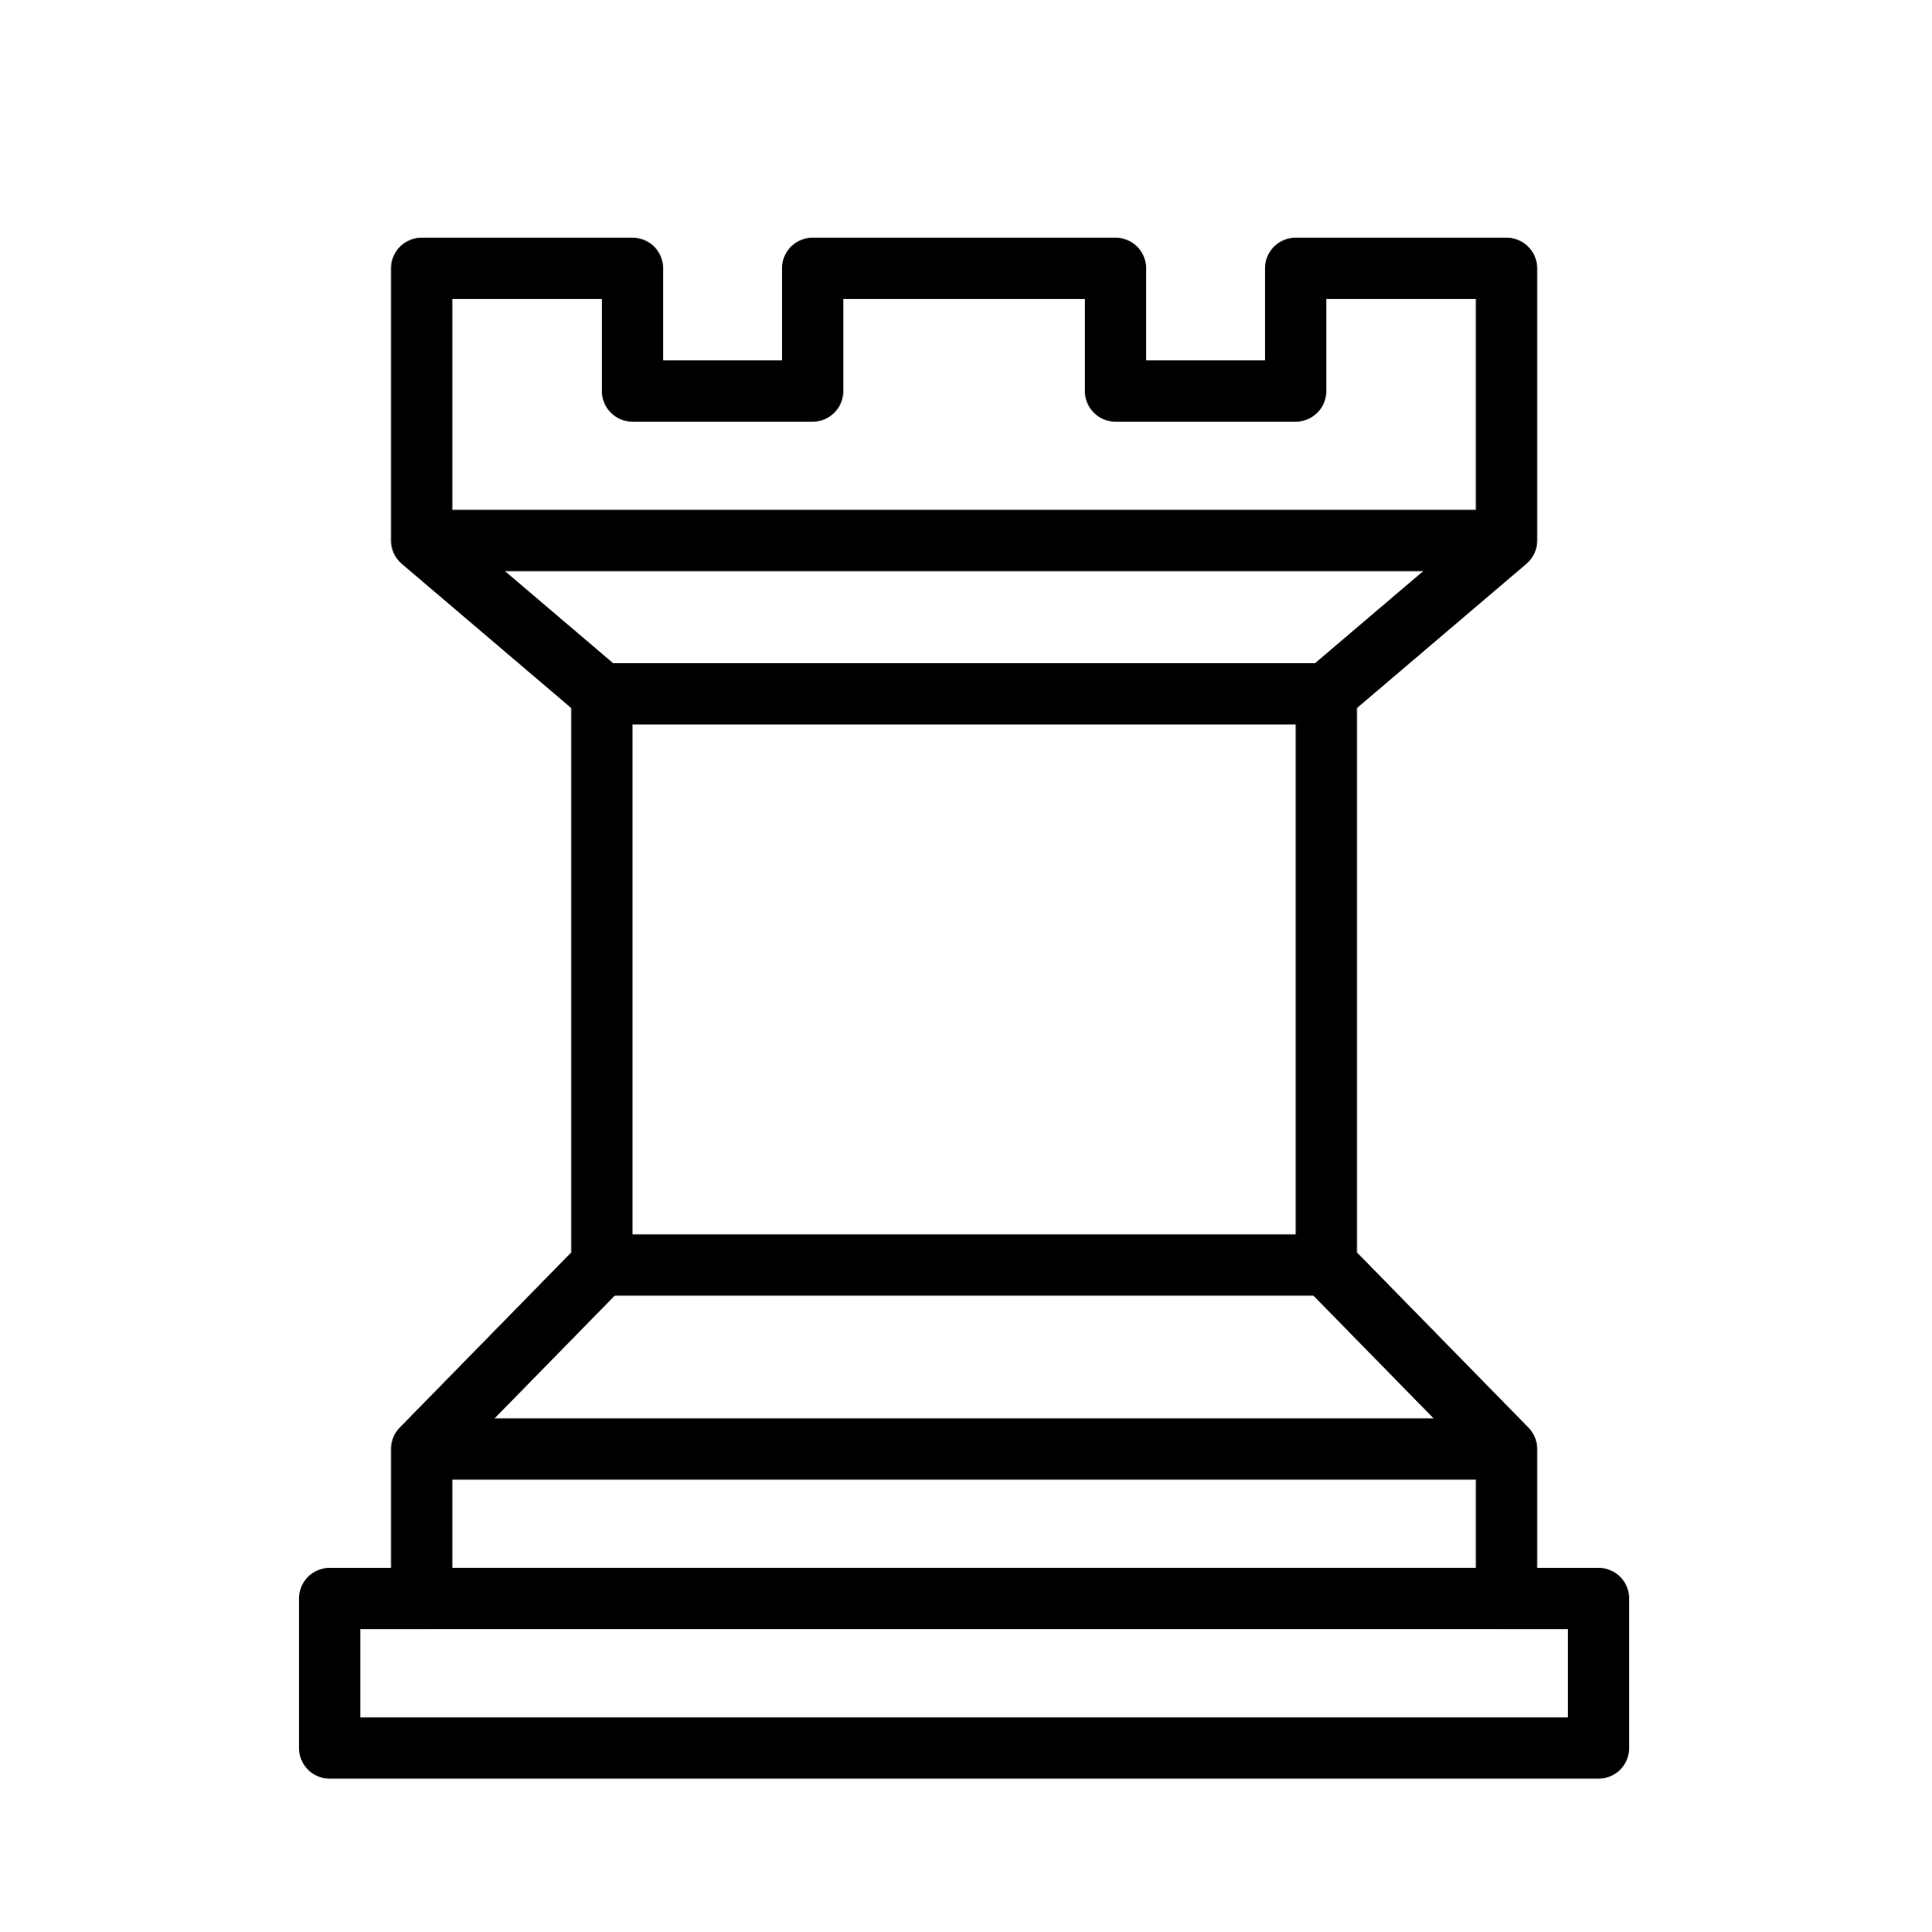 File:Chess tile rl.svg - Wikimedia Commons